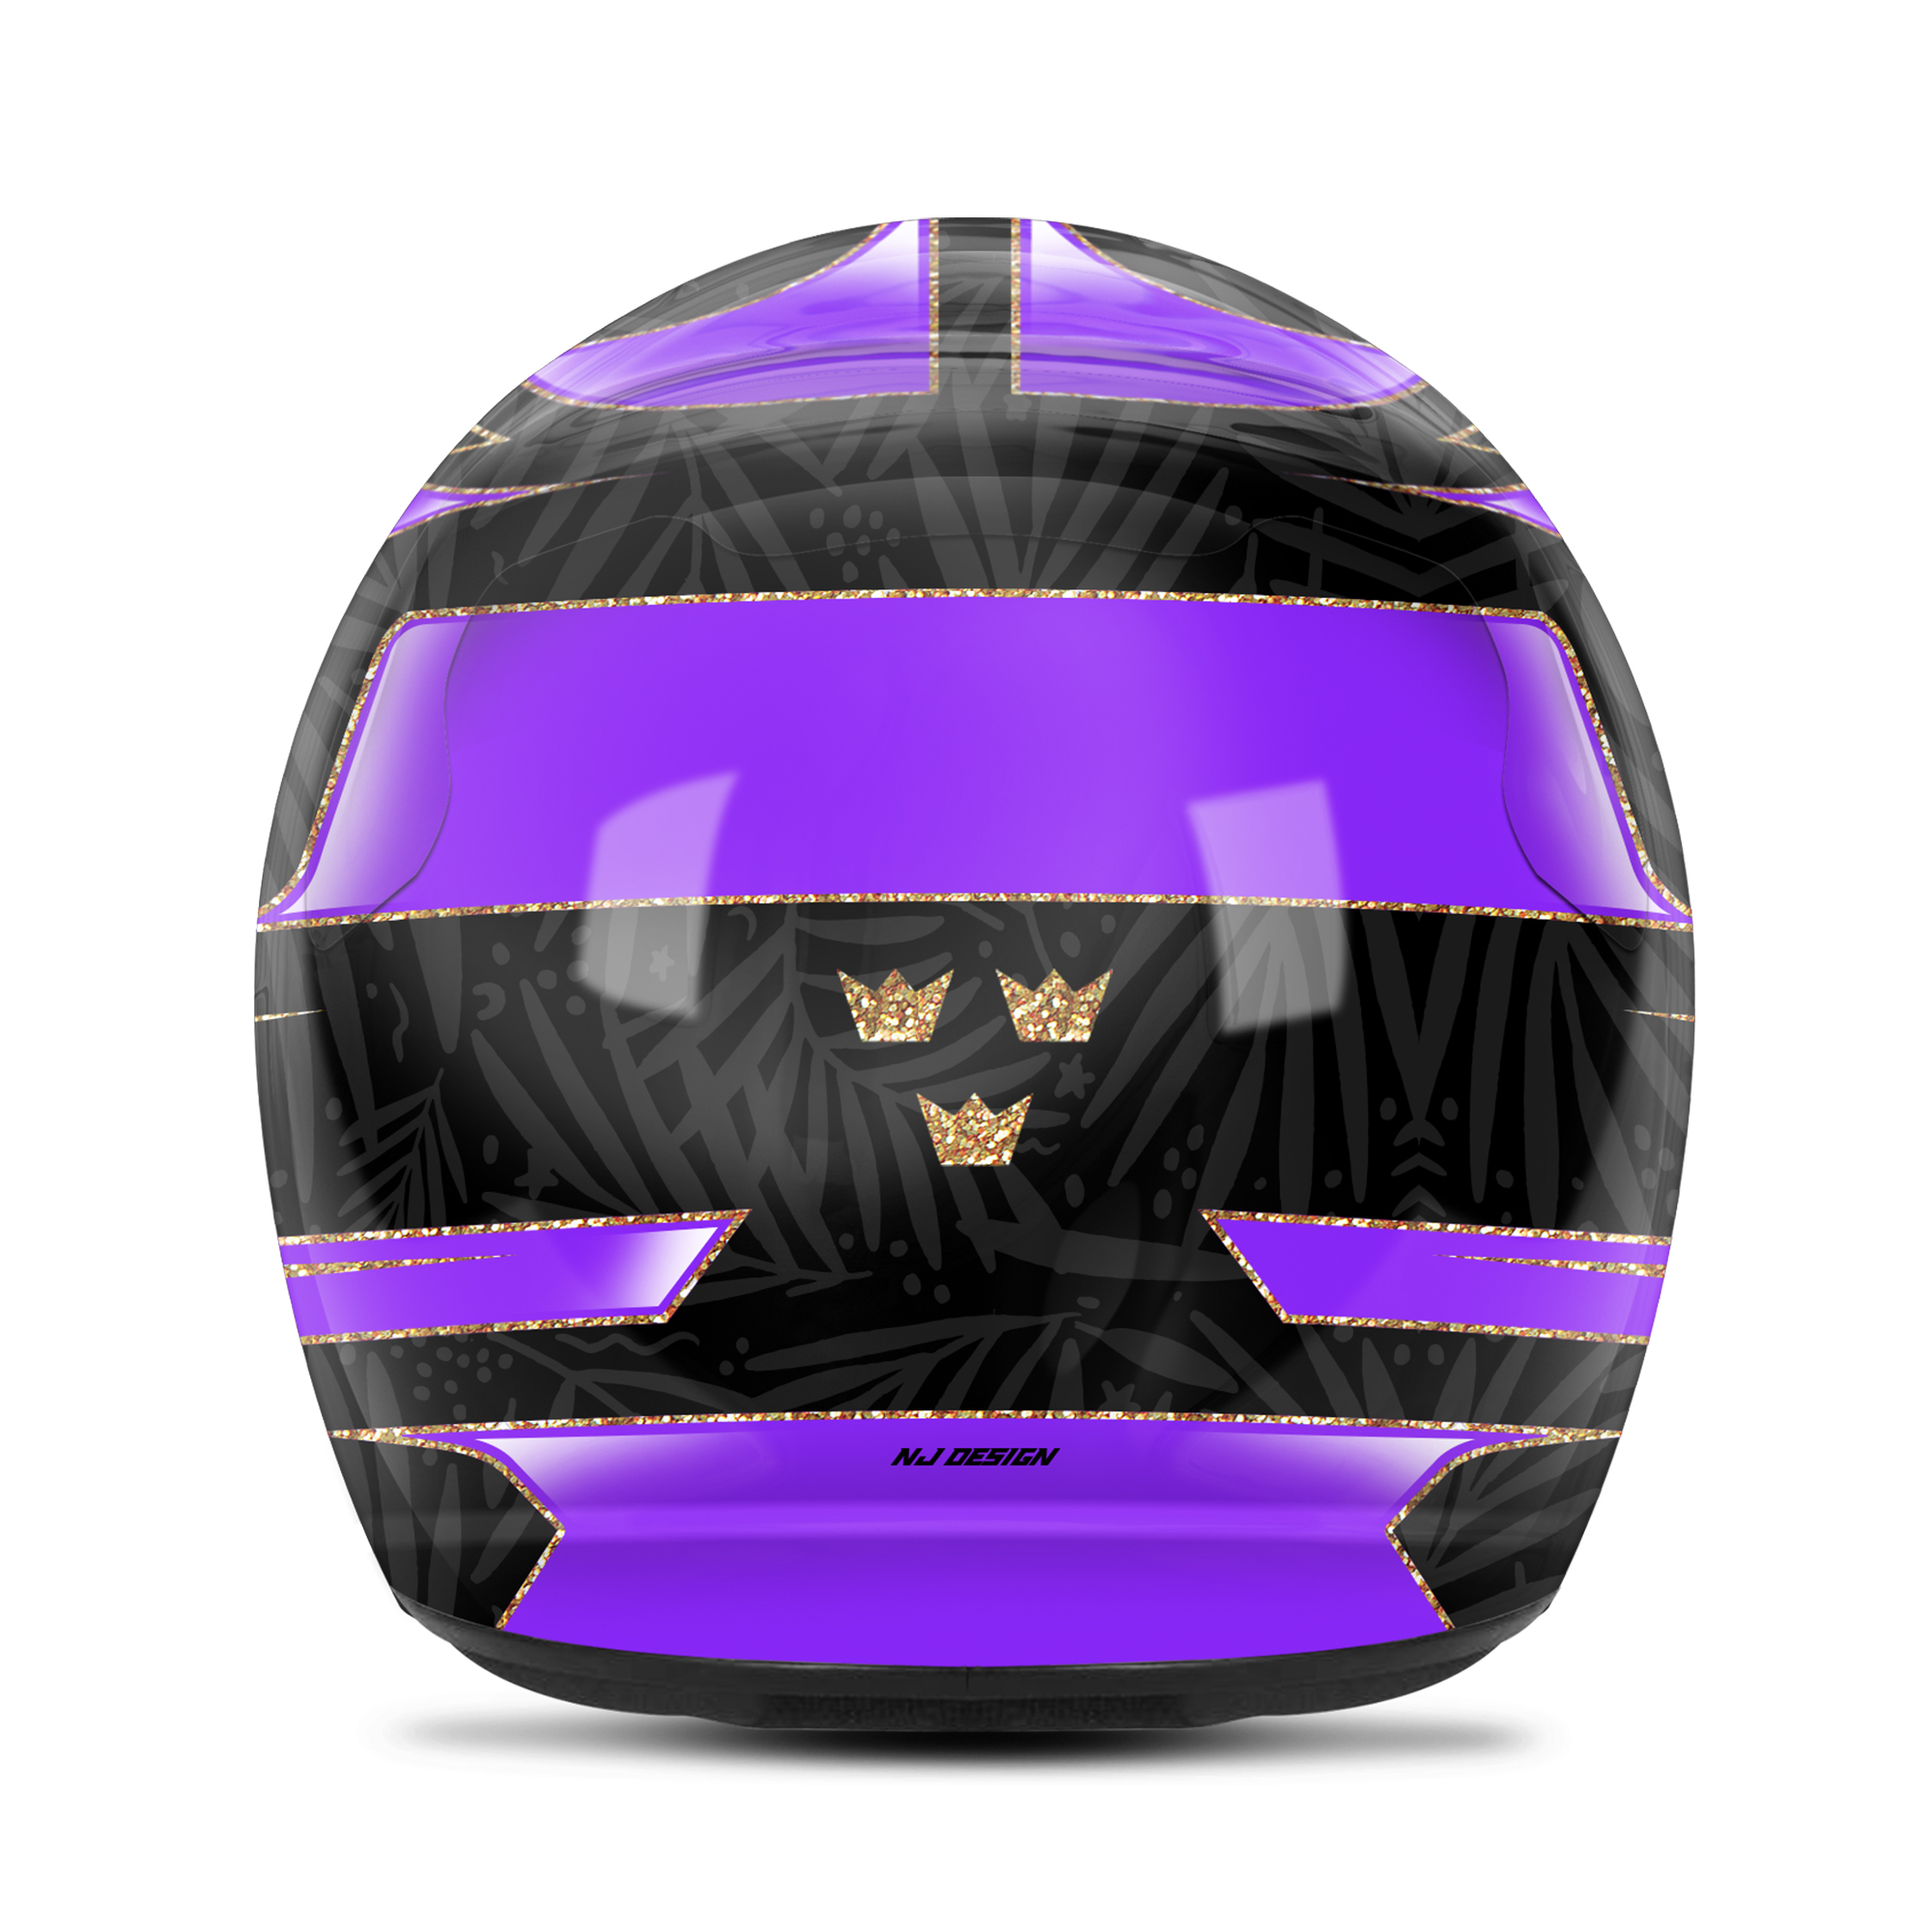 Arai SK-6 helmet design